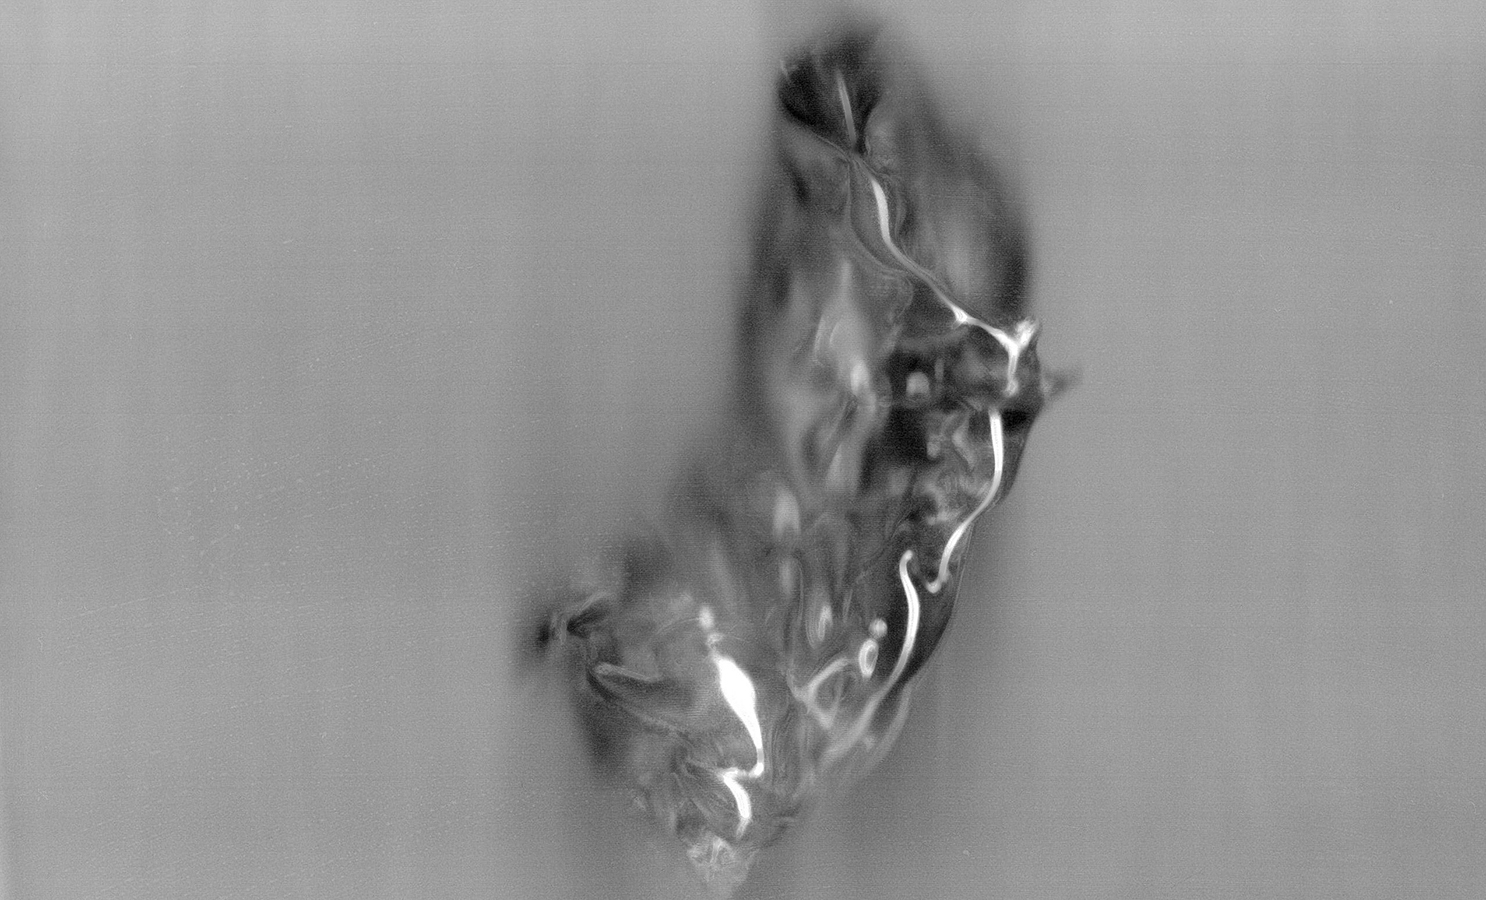 A blurry grayscale scan of a misshapen glass object